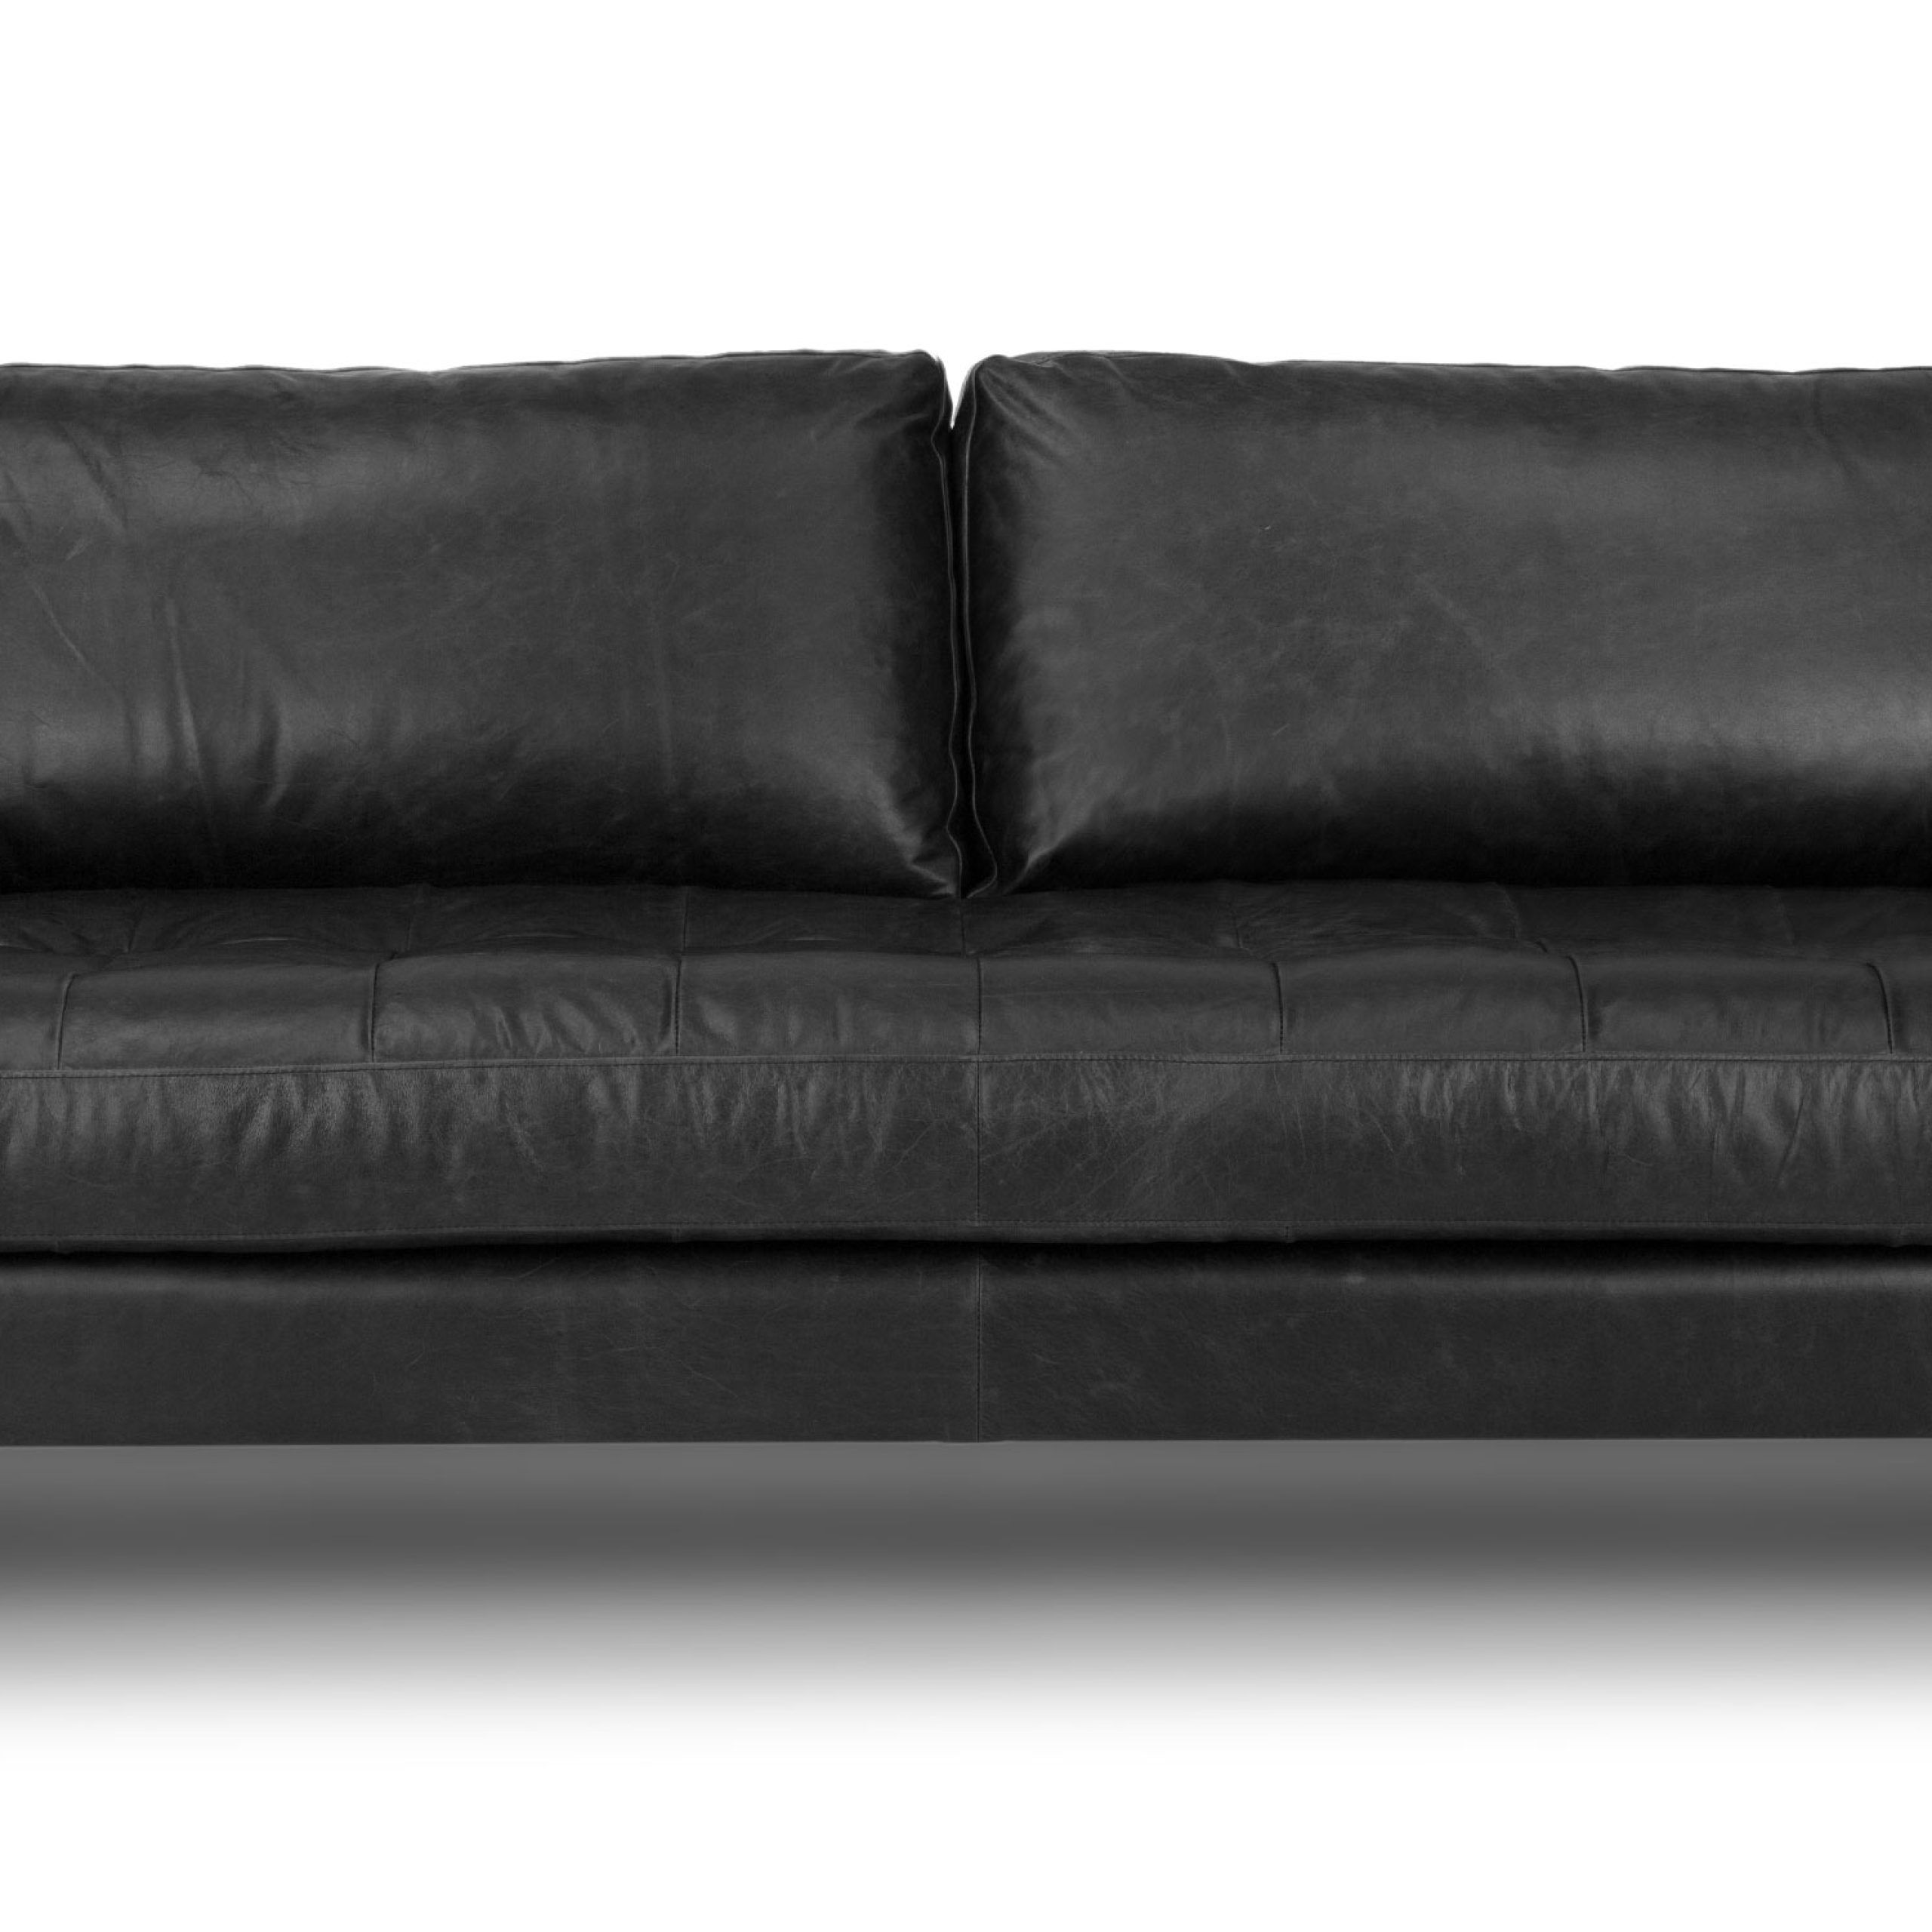 Sven Walnut & Oxford Black Leather 3 Seater Sofa | Article Regarding Sofas In Black (View 4 of 15)